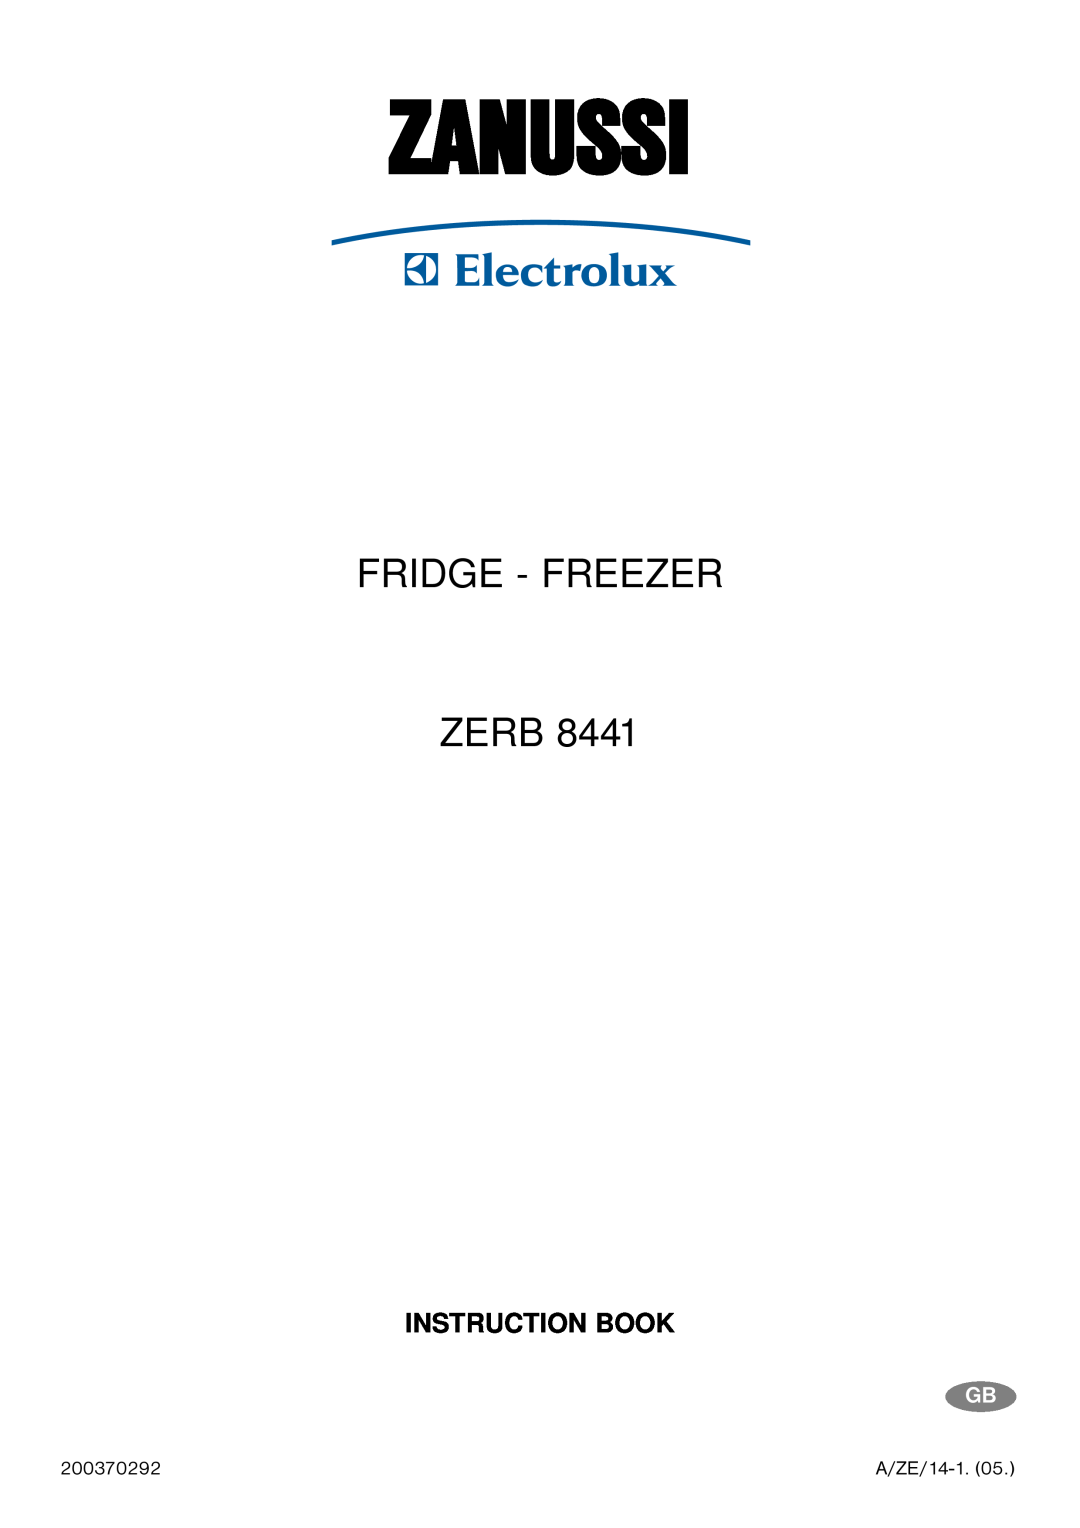 Zanussi ZERB 8441 manual Zanussi, Fridge - Freezer Zerb, Instruction Book 